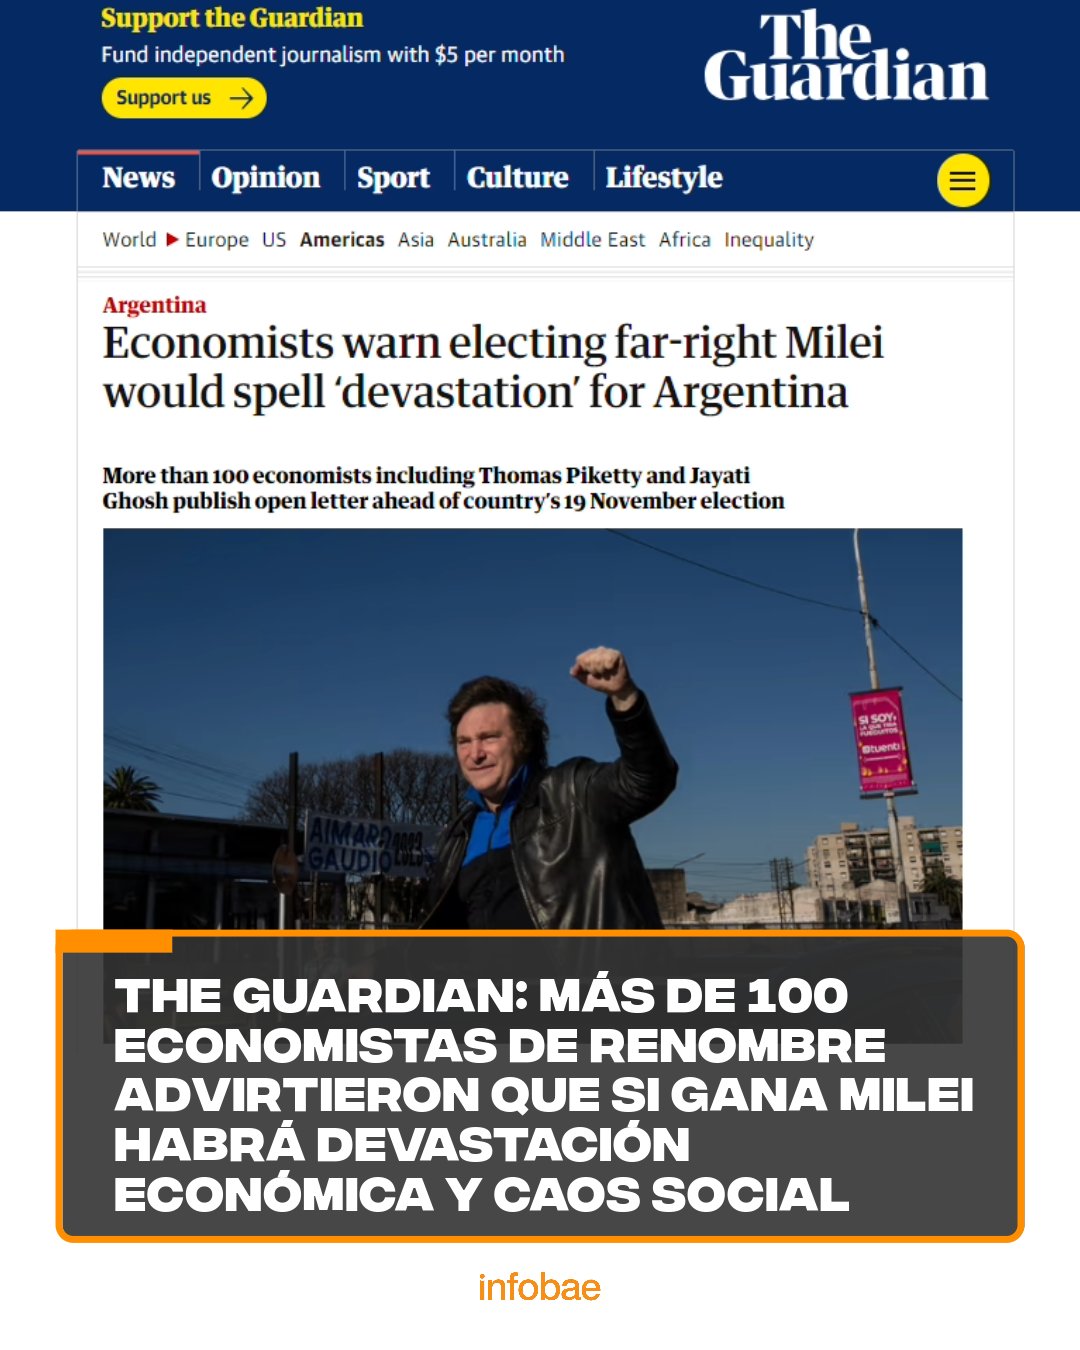 infobae on X: "The Guardian: más de 100 economistas de renombre advirtieron que si gana Milei habrá devastación económica y caos social https://t.co/axxH5S6cNo https://t.co/6bCYKYZdXL" / X